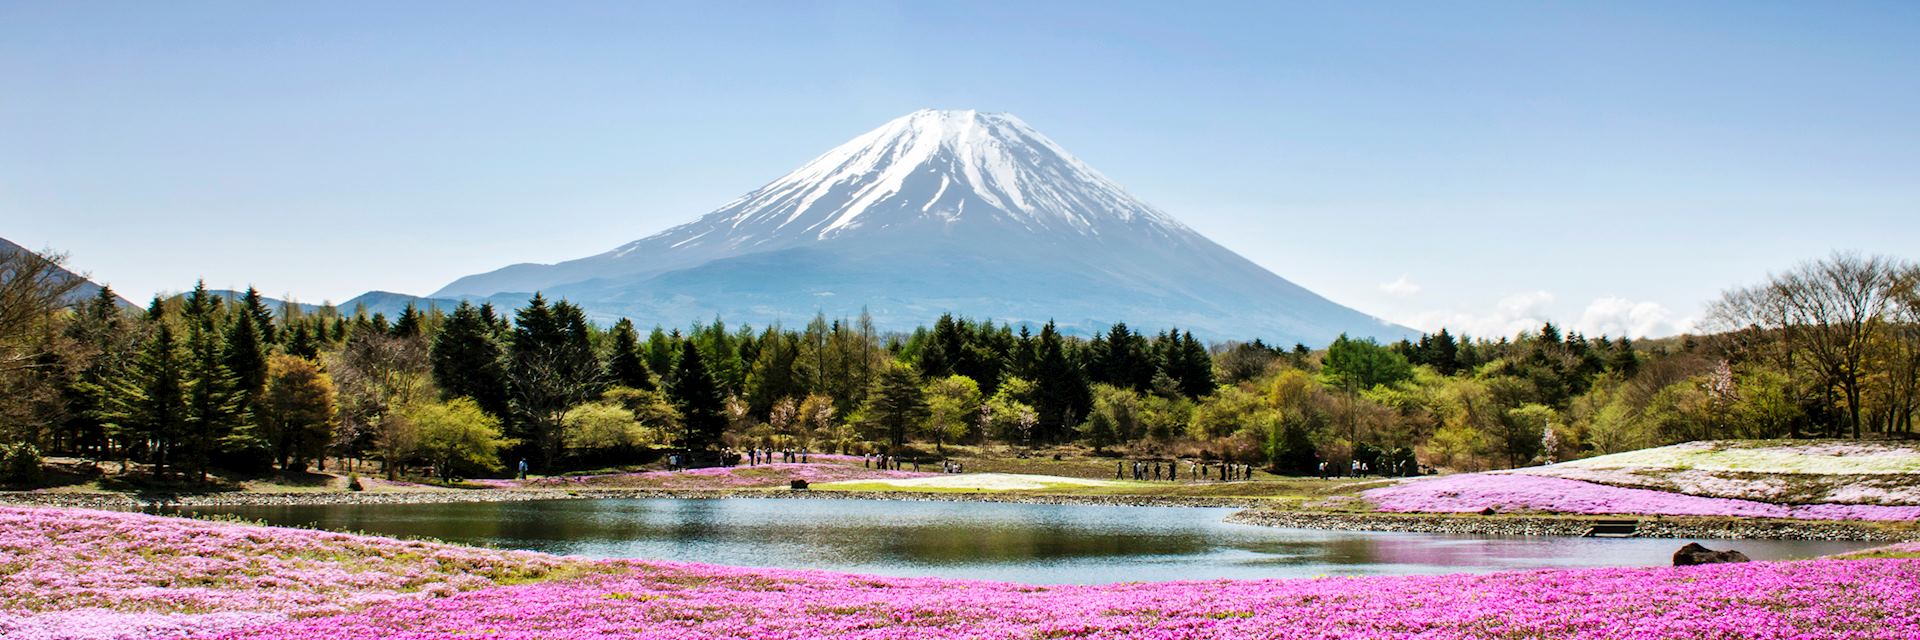 Shibazakura flowers around Mount Fuji